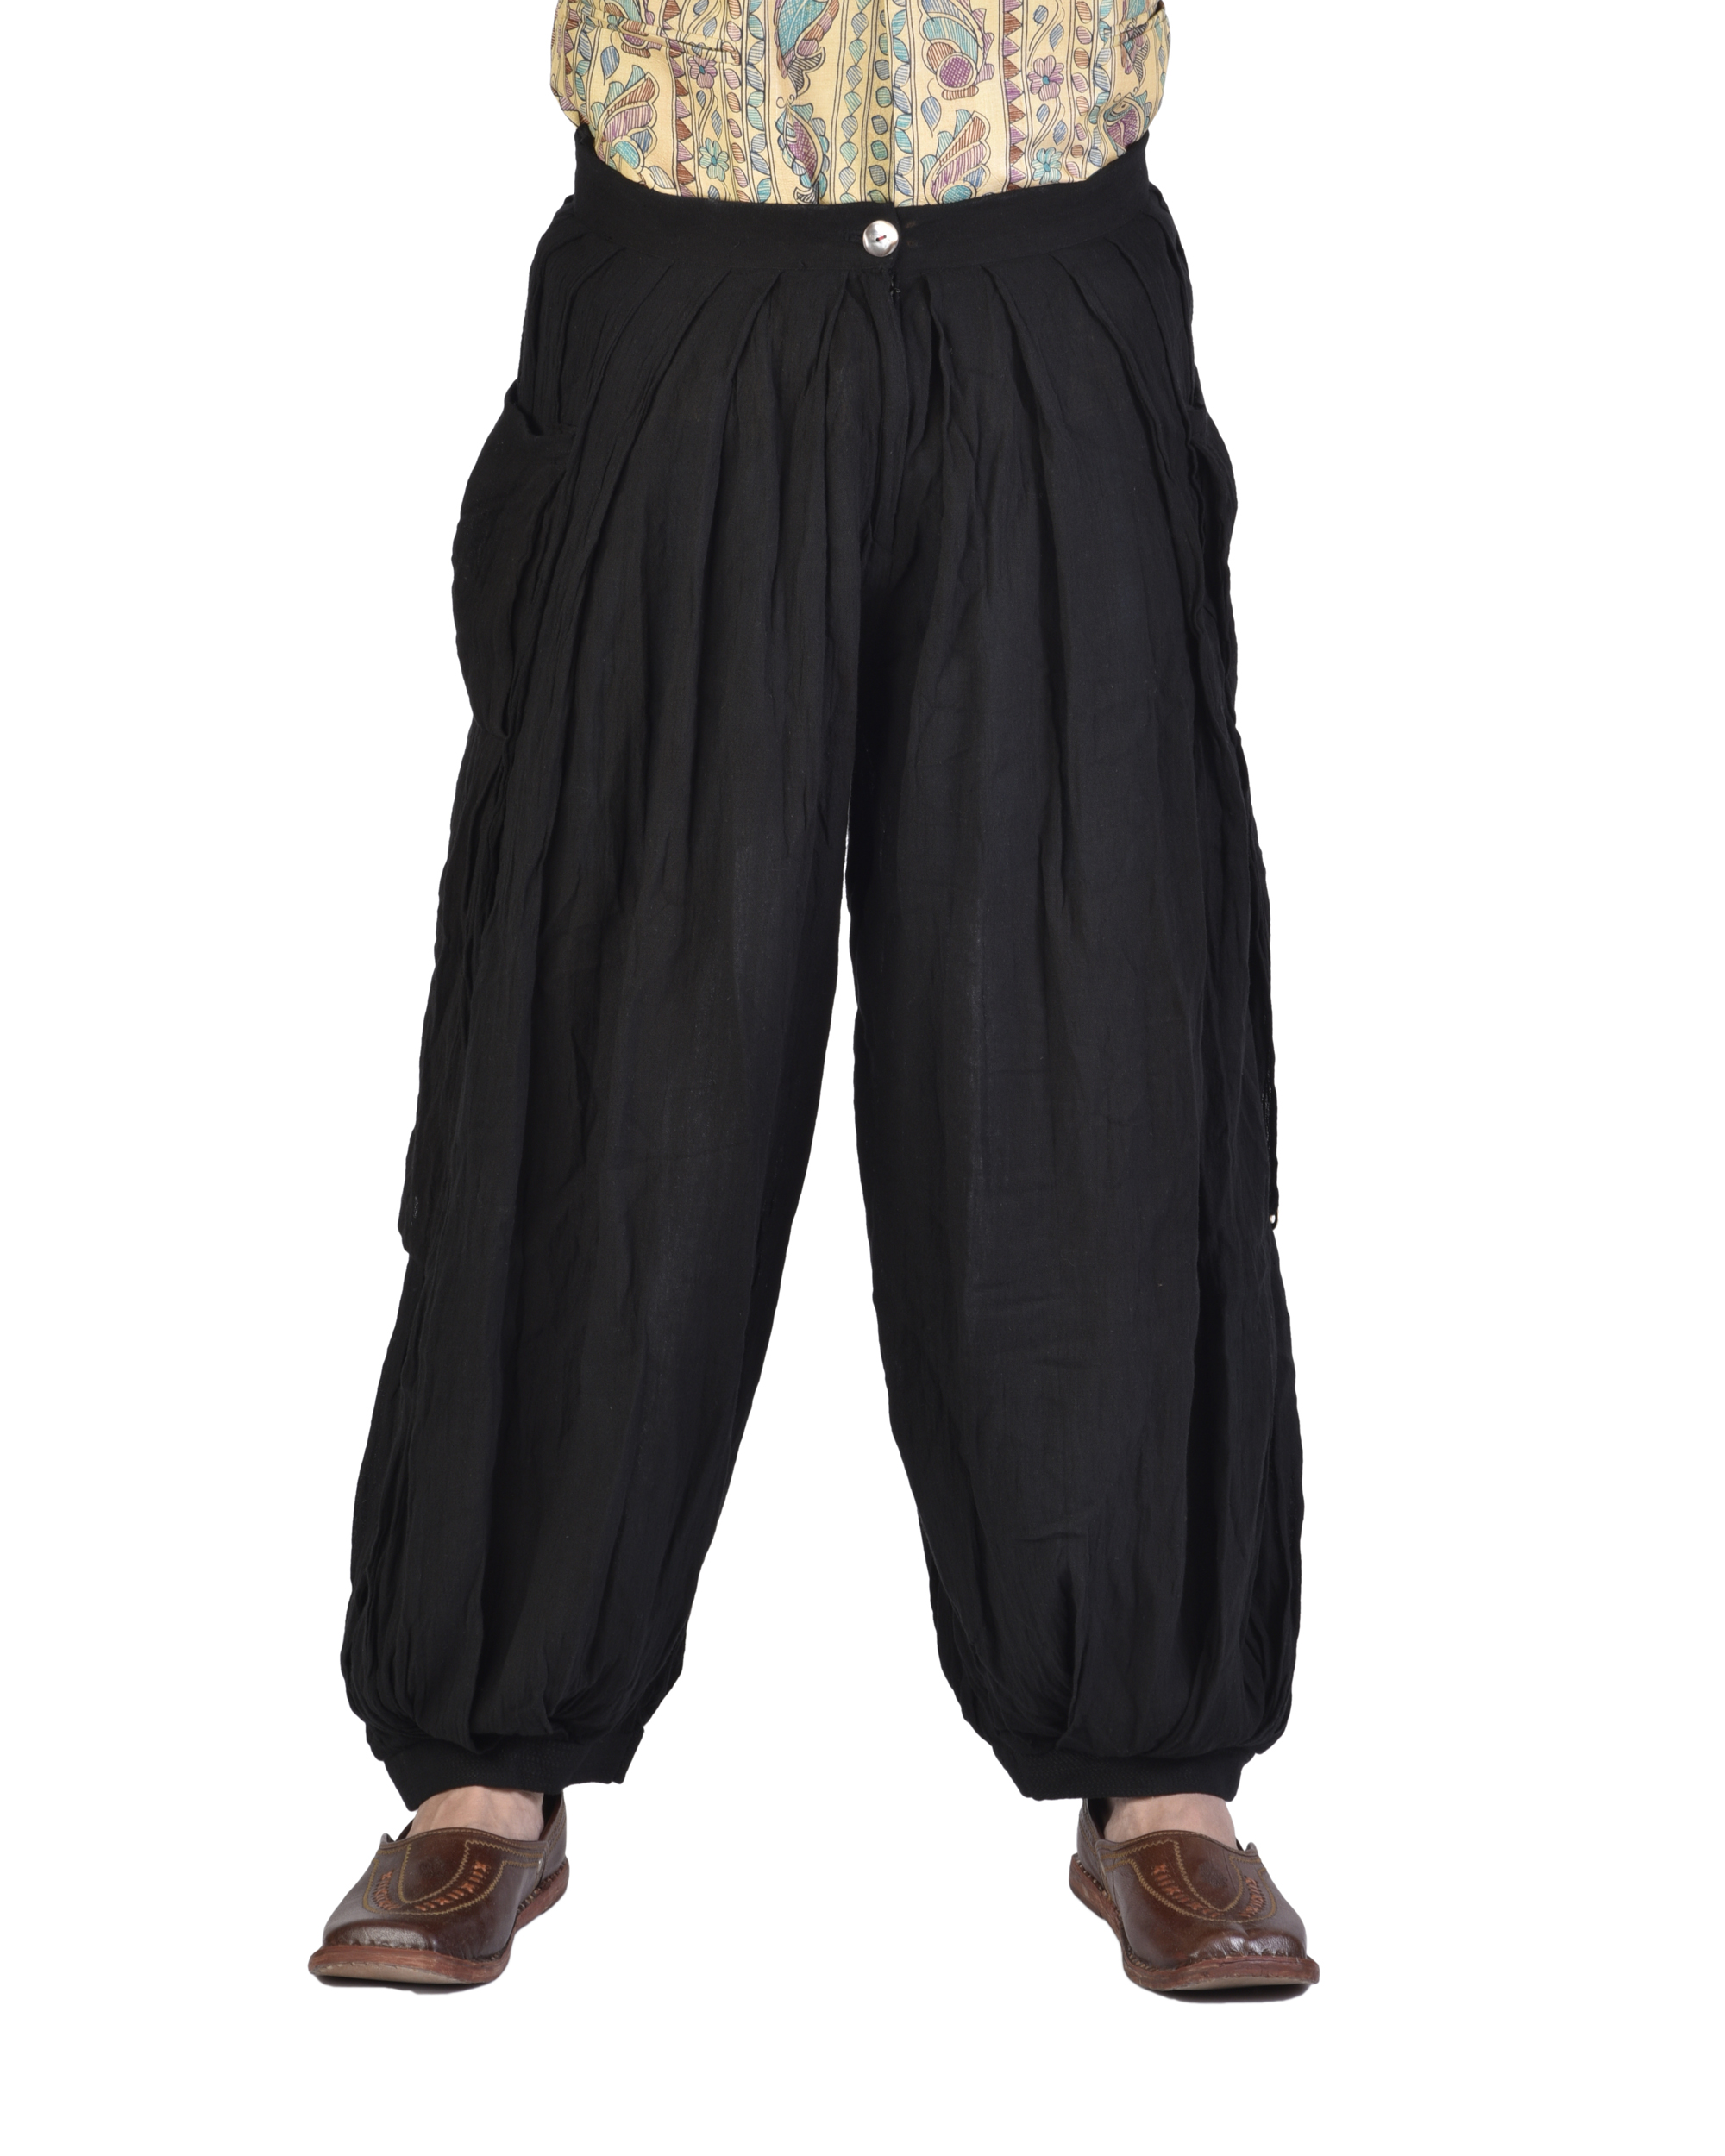 Black dhoti pants by Asmita Marwa | The Secret Label